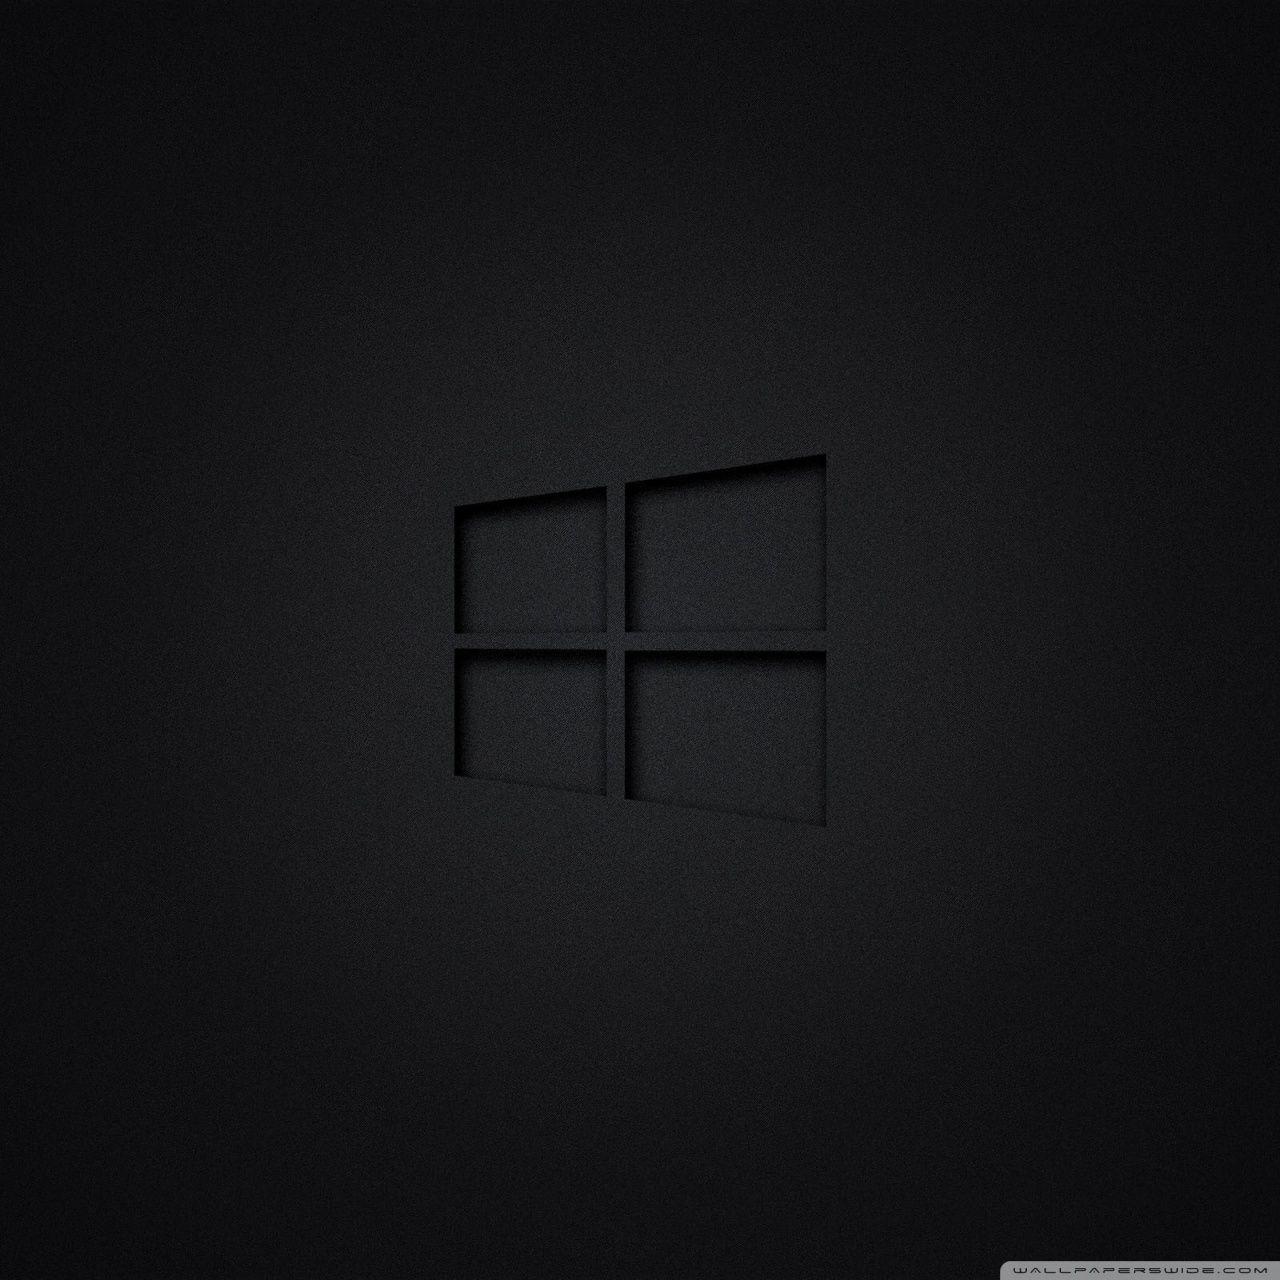 4K wallpaper: Black Ultra Hd Windows 10 Wallpaper